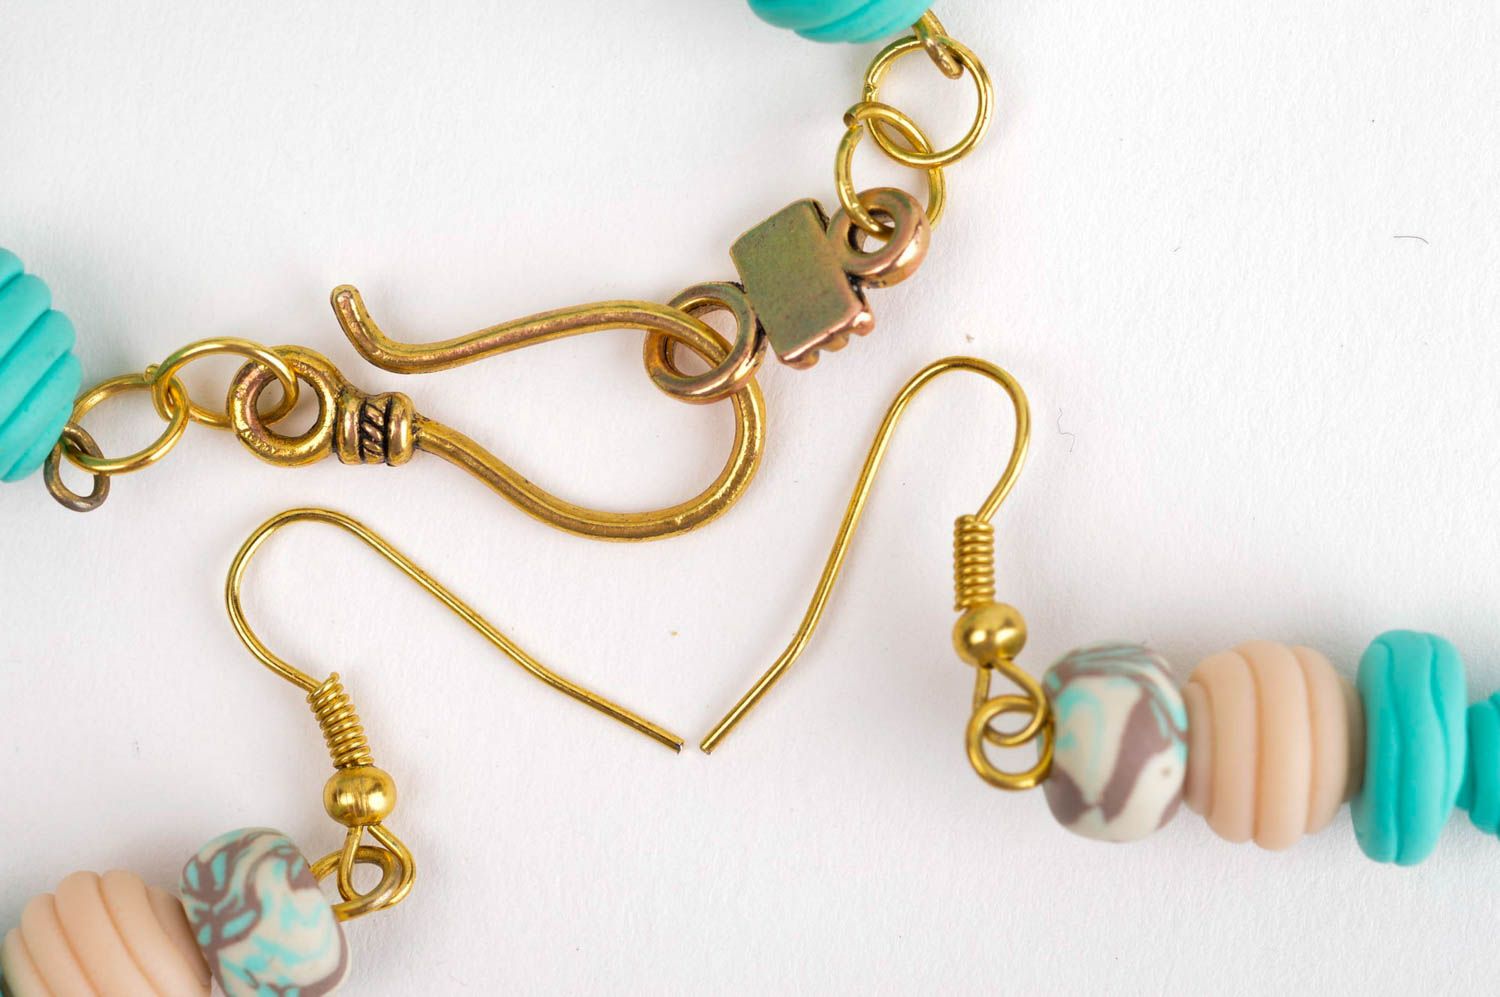 Handmade earrings designer bracelet clay jewelry set gift for her unusual gift photo 4